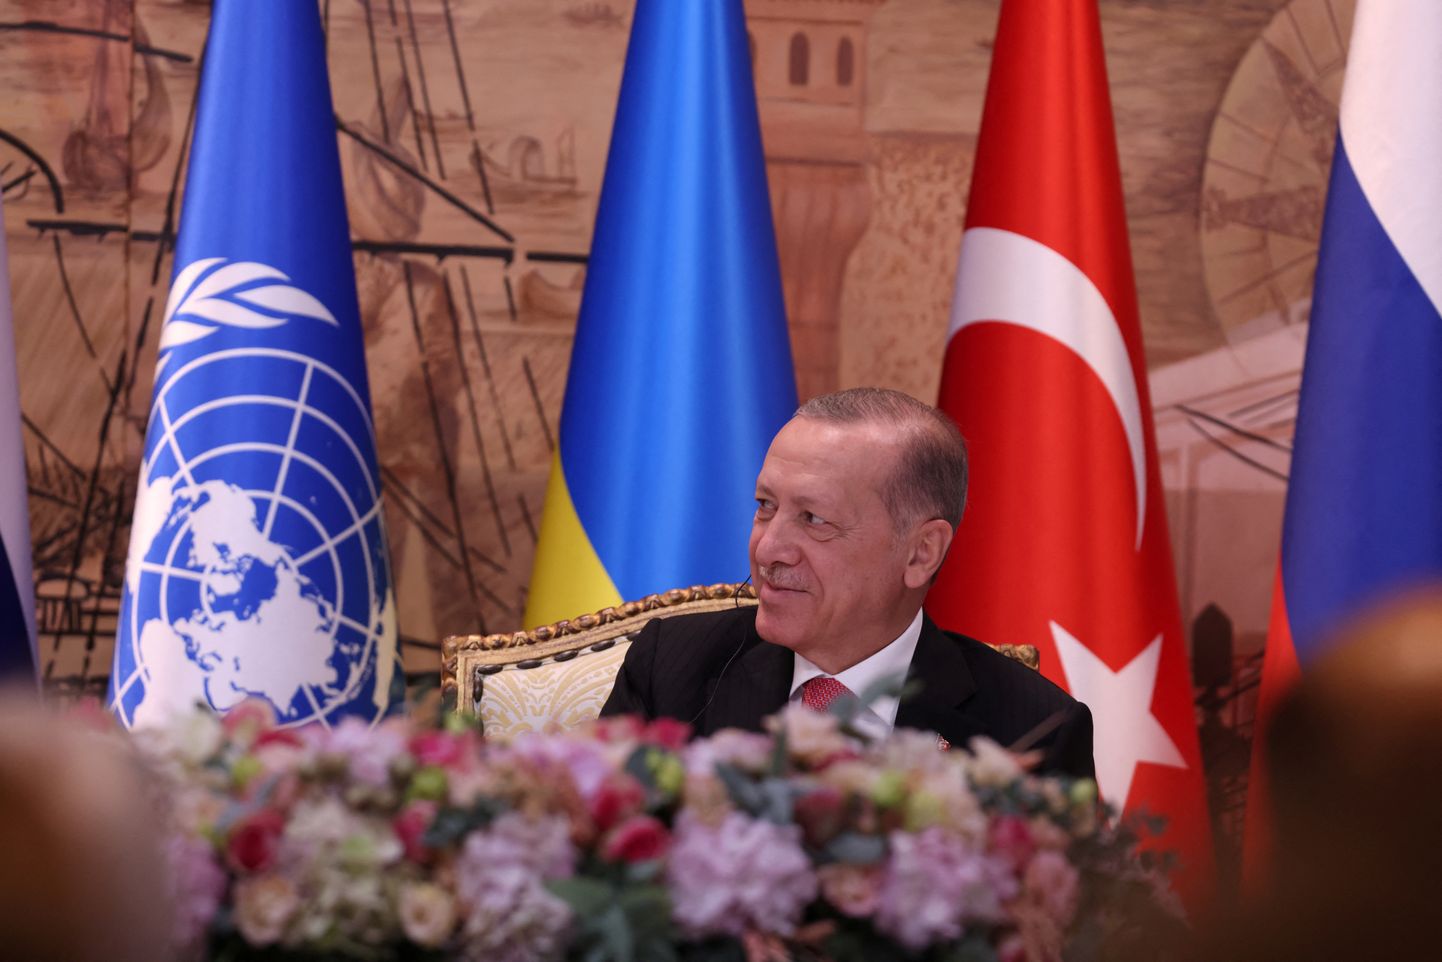 Türgi president Recep Tayyip Erdogan.